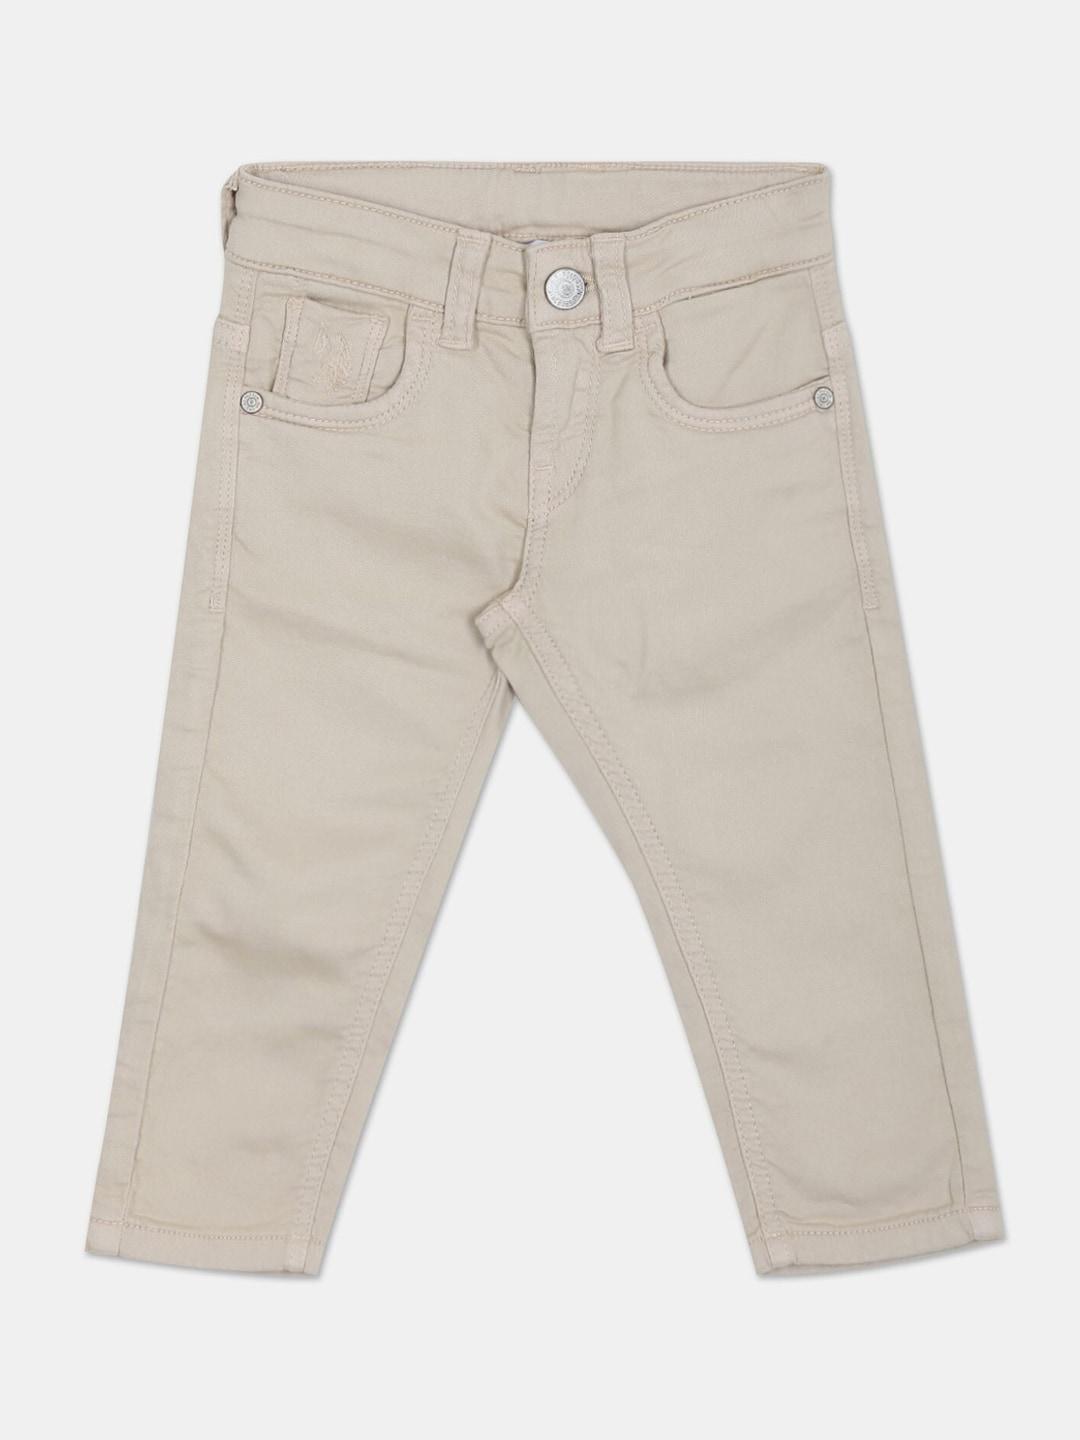 u.s. polo assn. kids boys slim fit cotton jeans